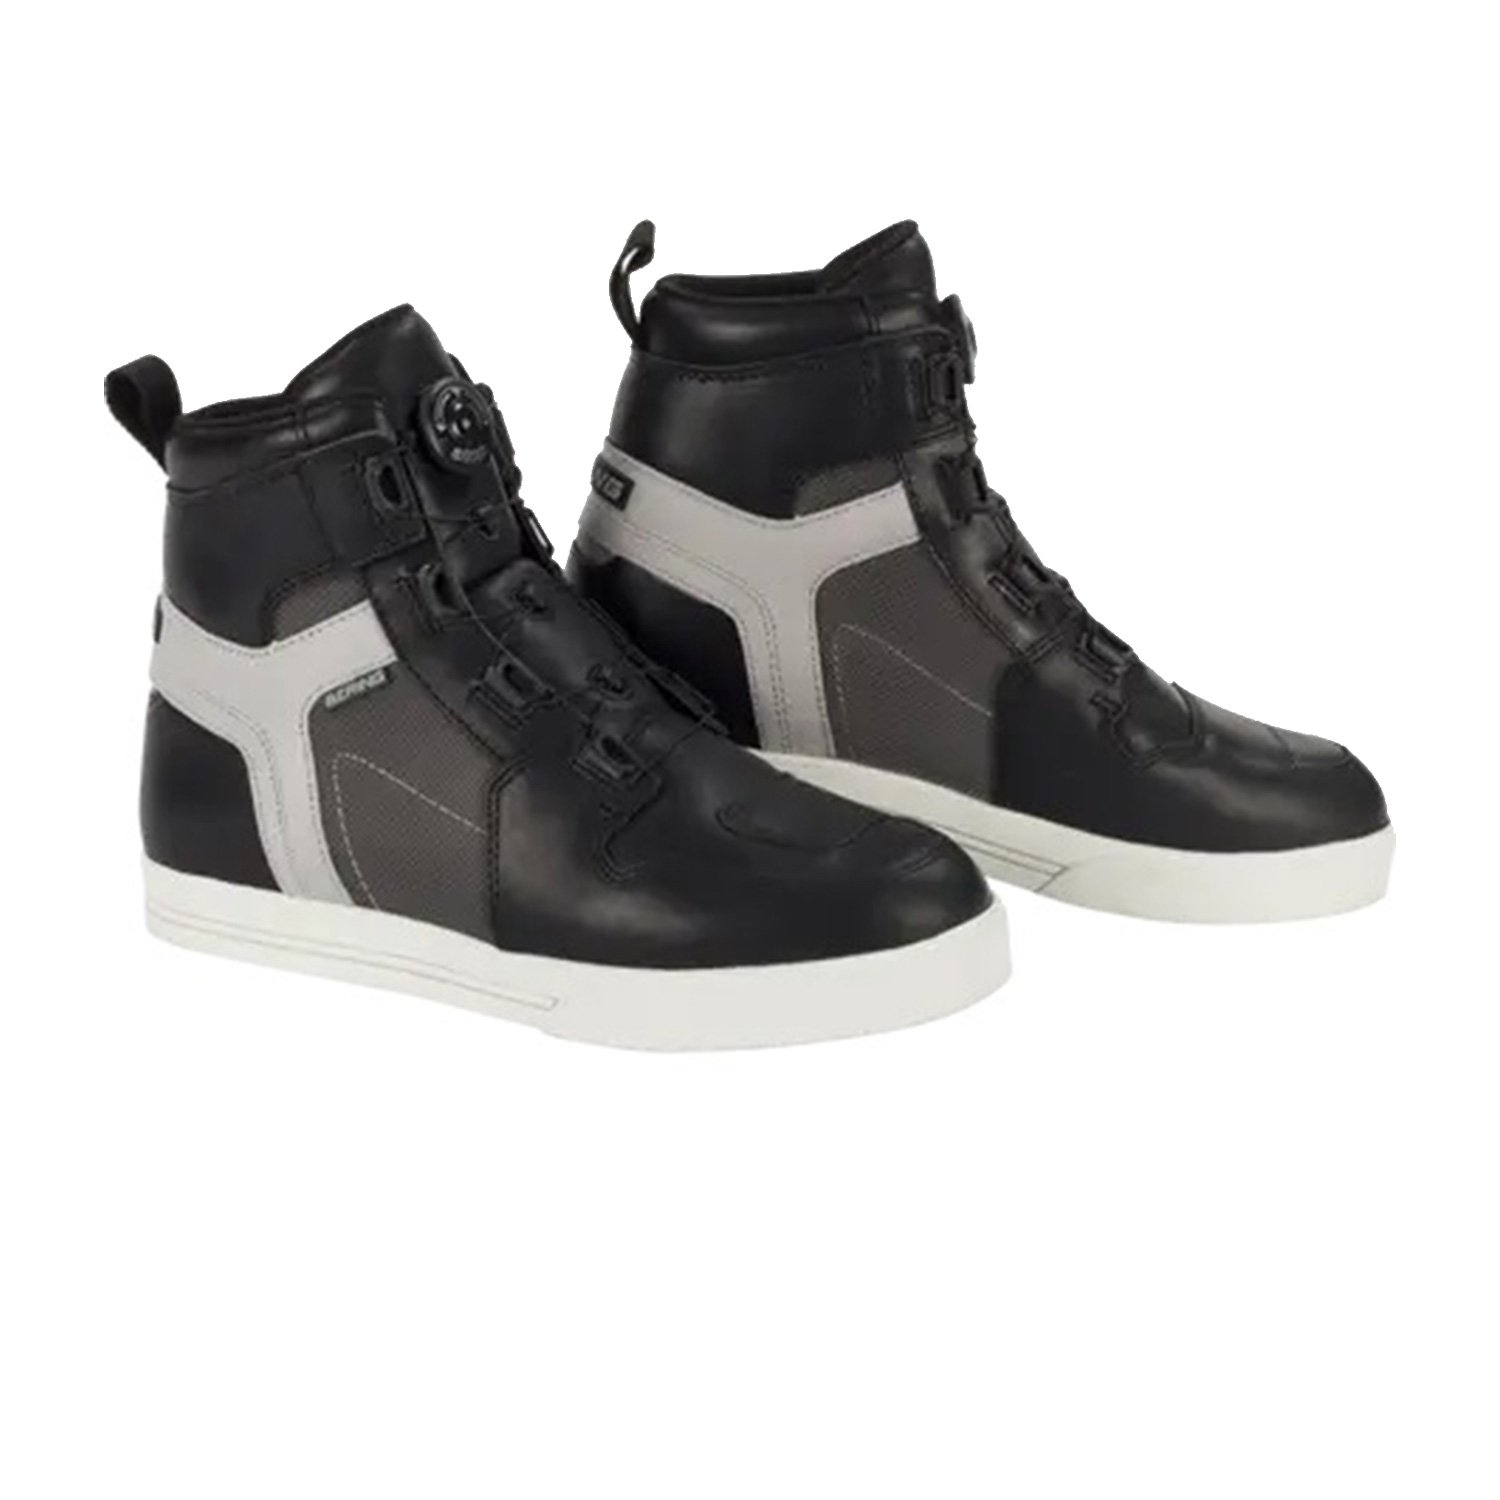 Image of Bering Sneakers Reflex Vented Black Grey Size 43 EN